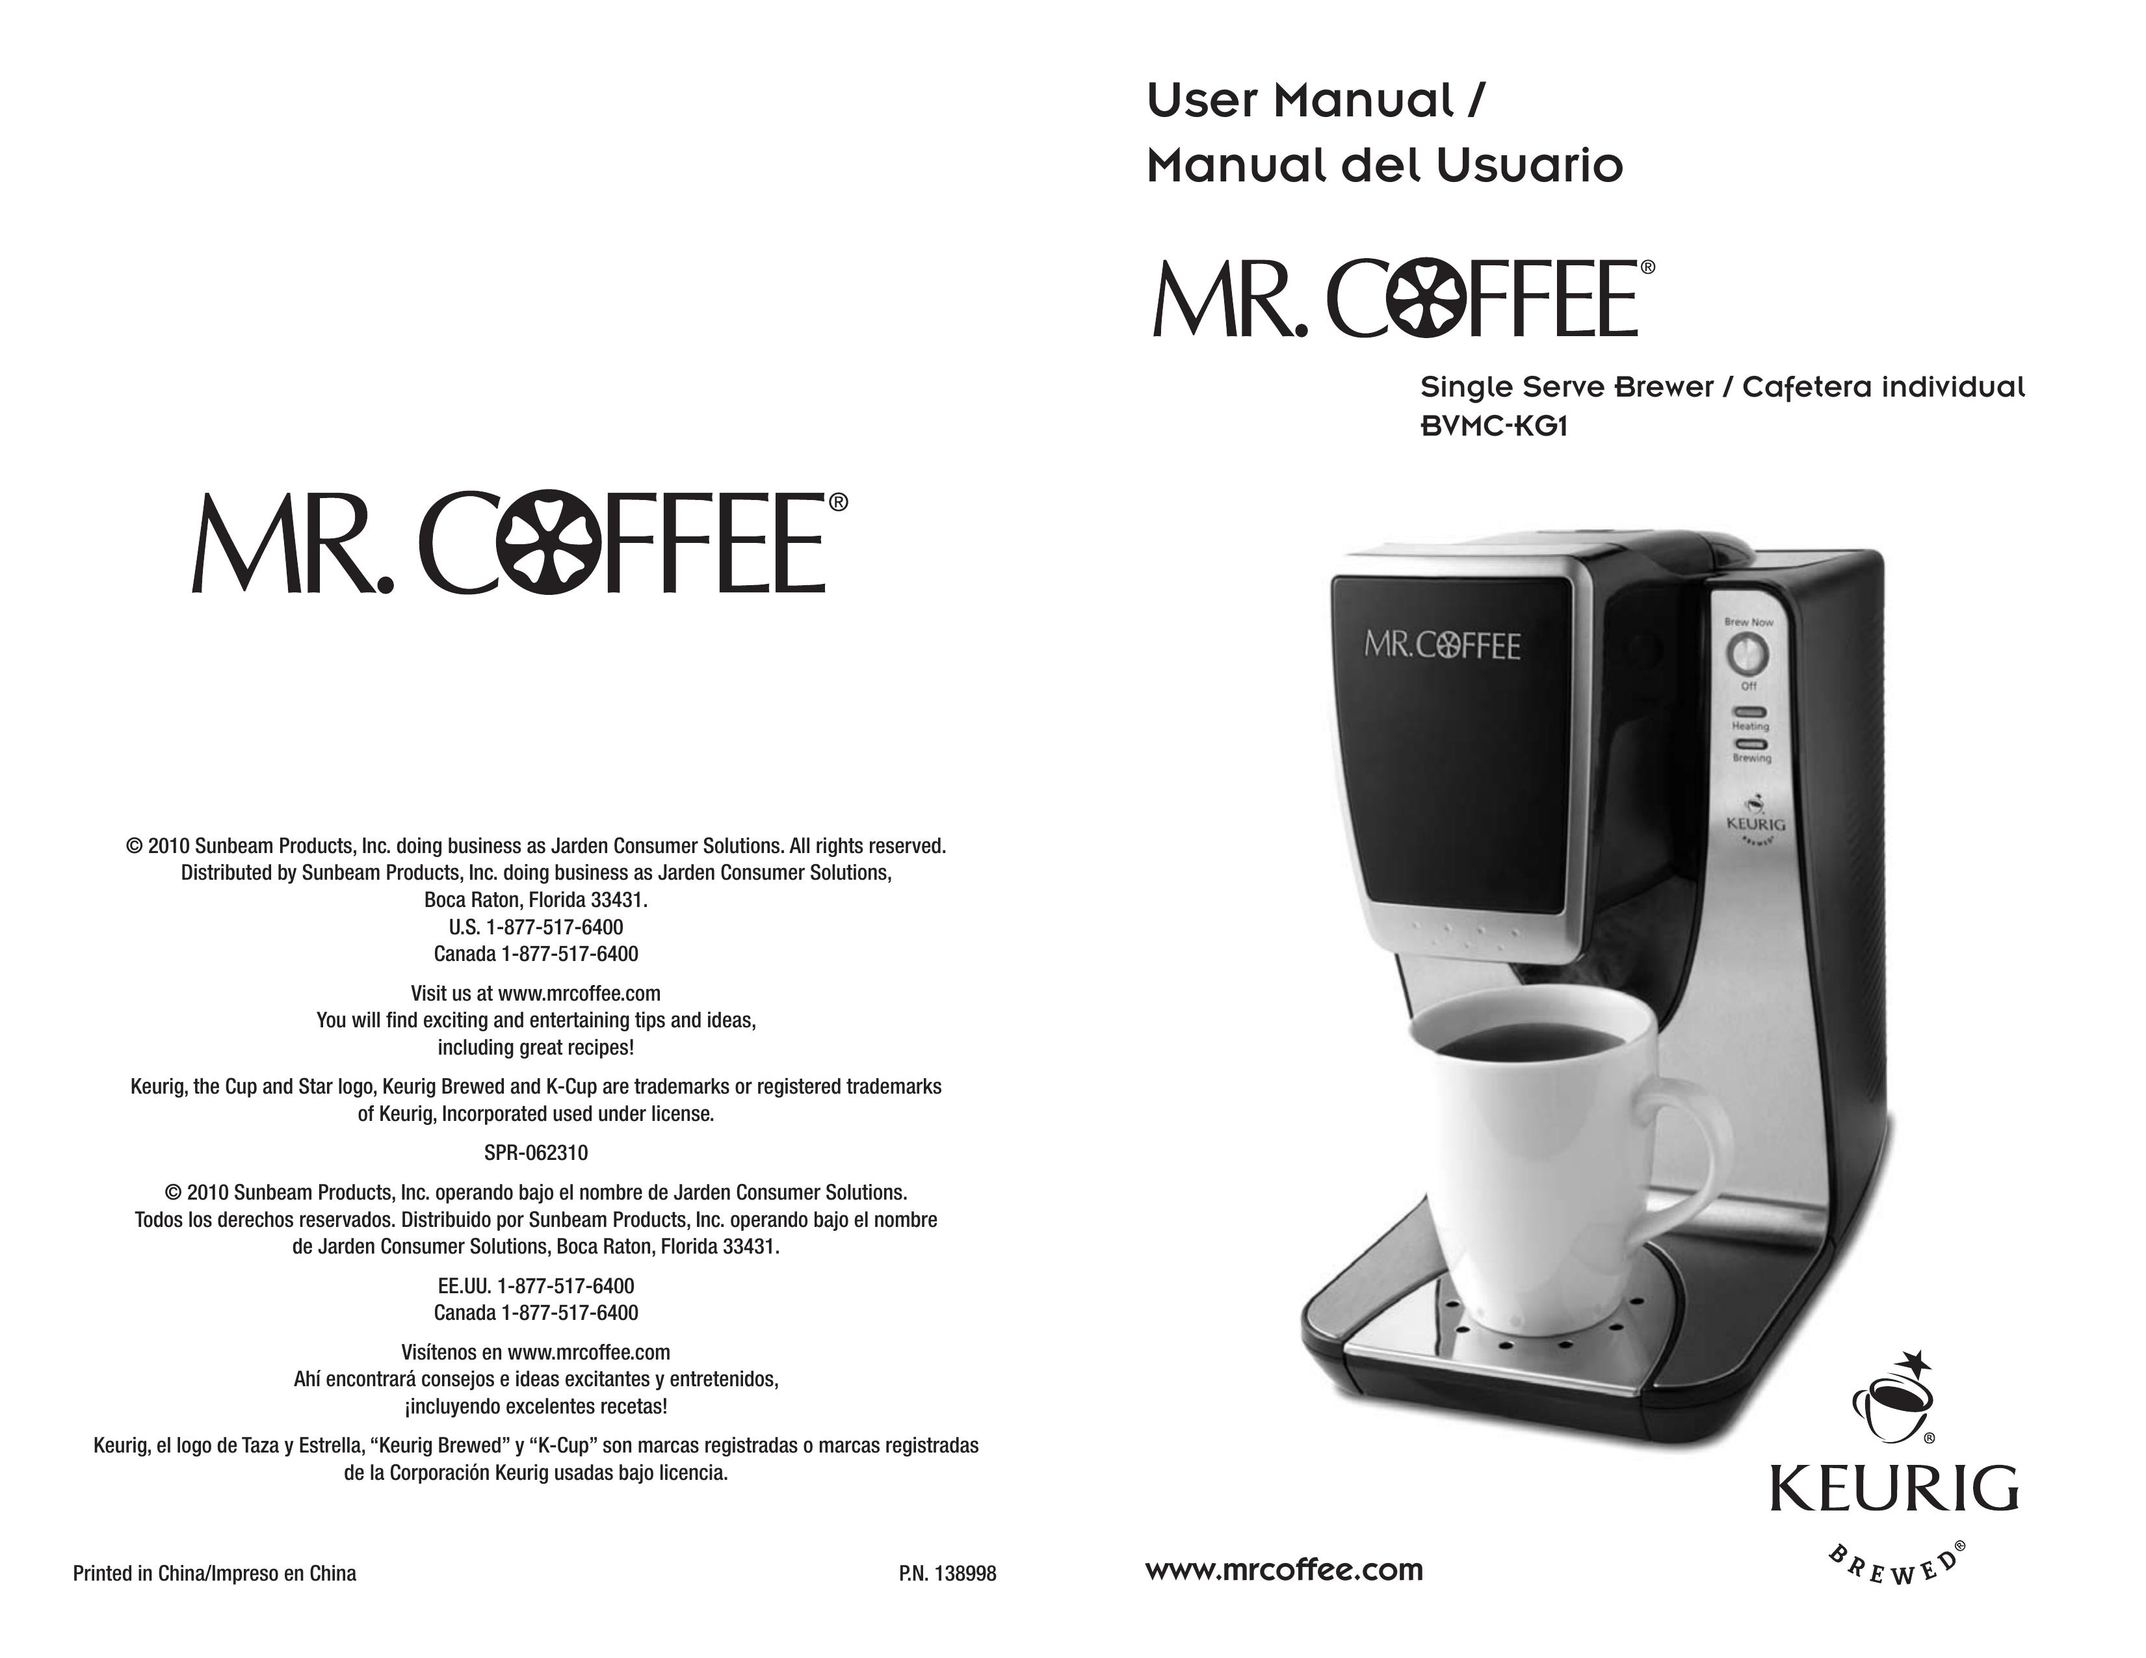 Mr. Coffee BVMC-KG1 Coffeemaker User Manual